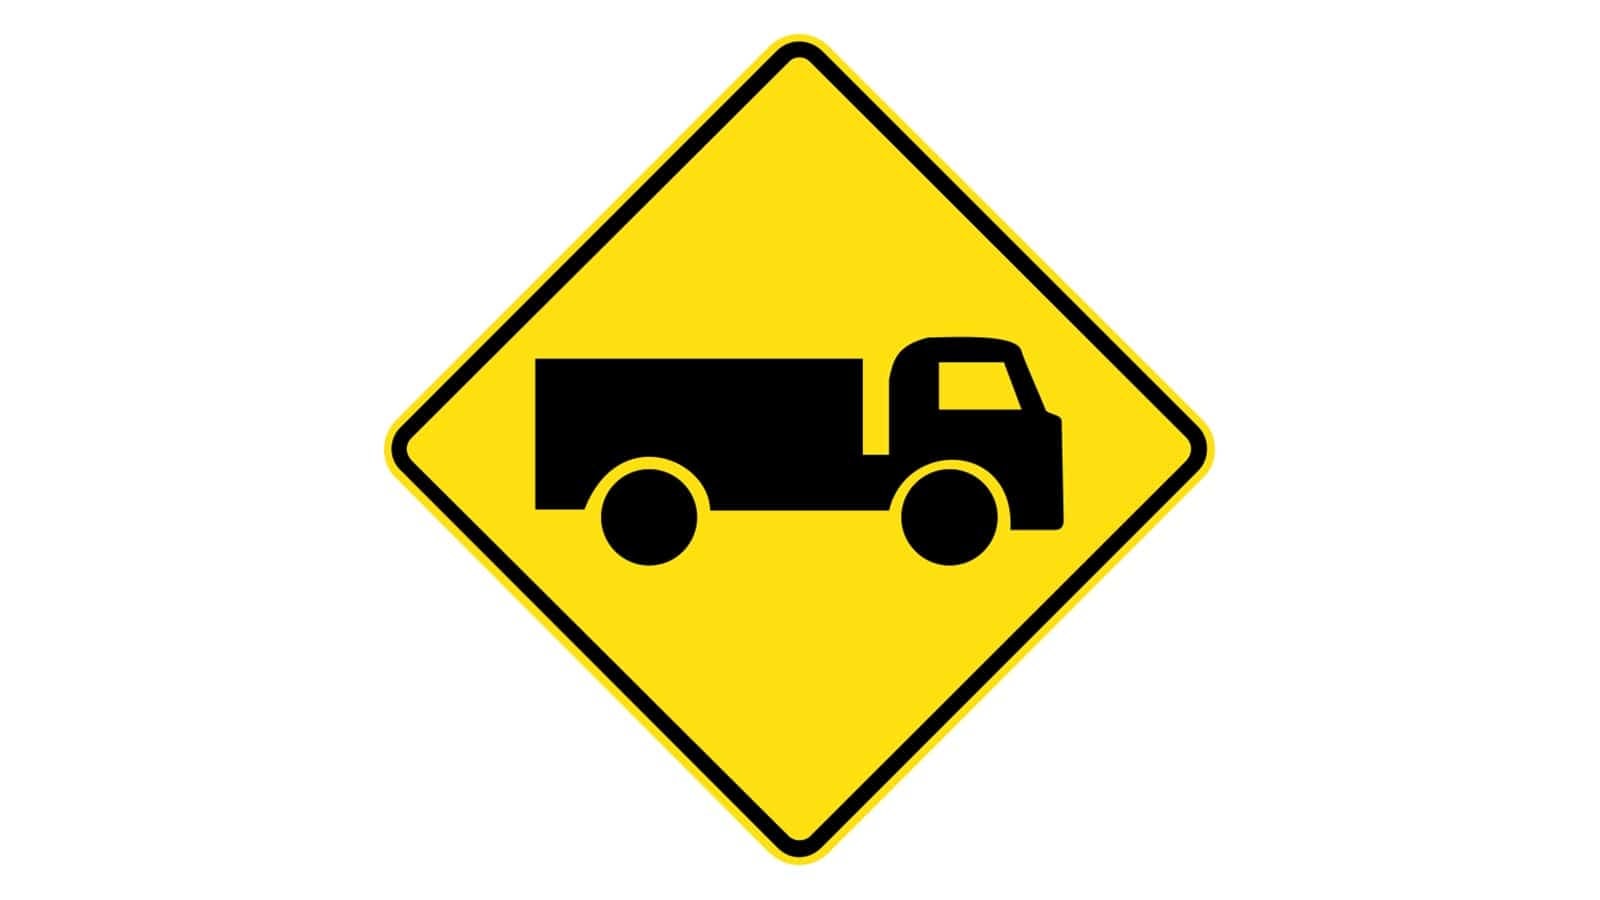 Trucks Crossing or Entering Sign